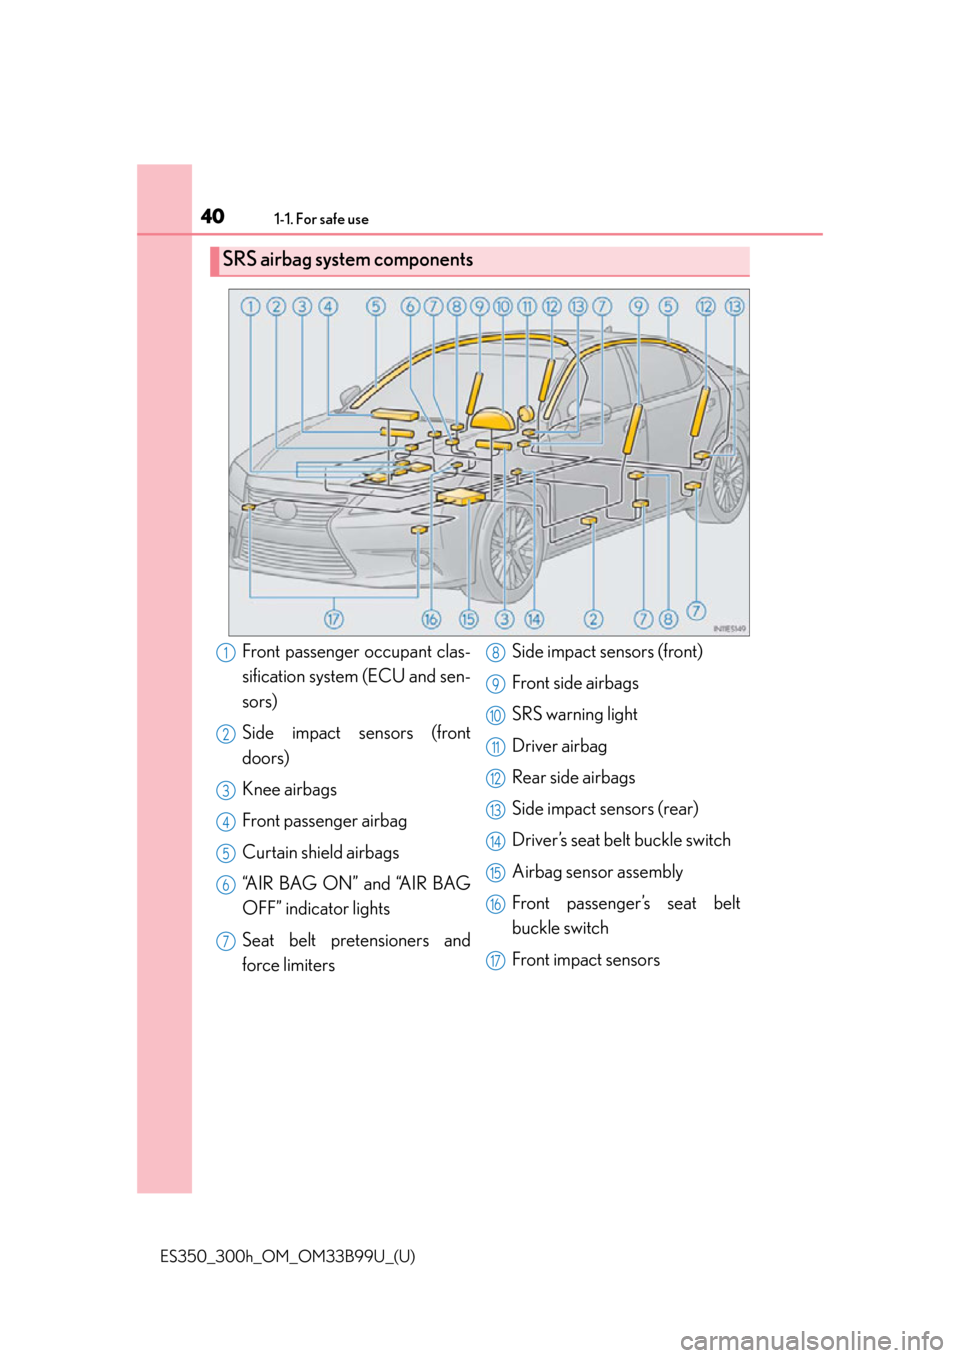 Lexus ES300h 2015  Key information /  (OM33B99U) Owners Guide 401-1. For safe use
ES350_300h_OM_OM33B99U_(U)
SRS airbag system components
Front passenger occupant clas-
sification system (ECU and sen-
sors)
Side impact sensors (front
doors)
Knee airbags
Front pa